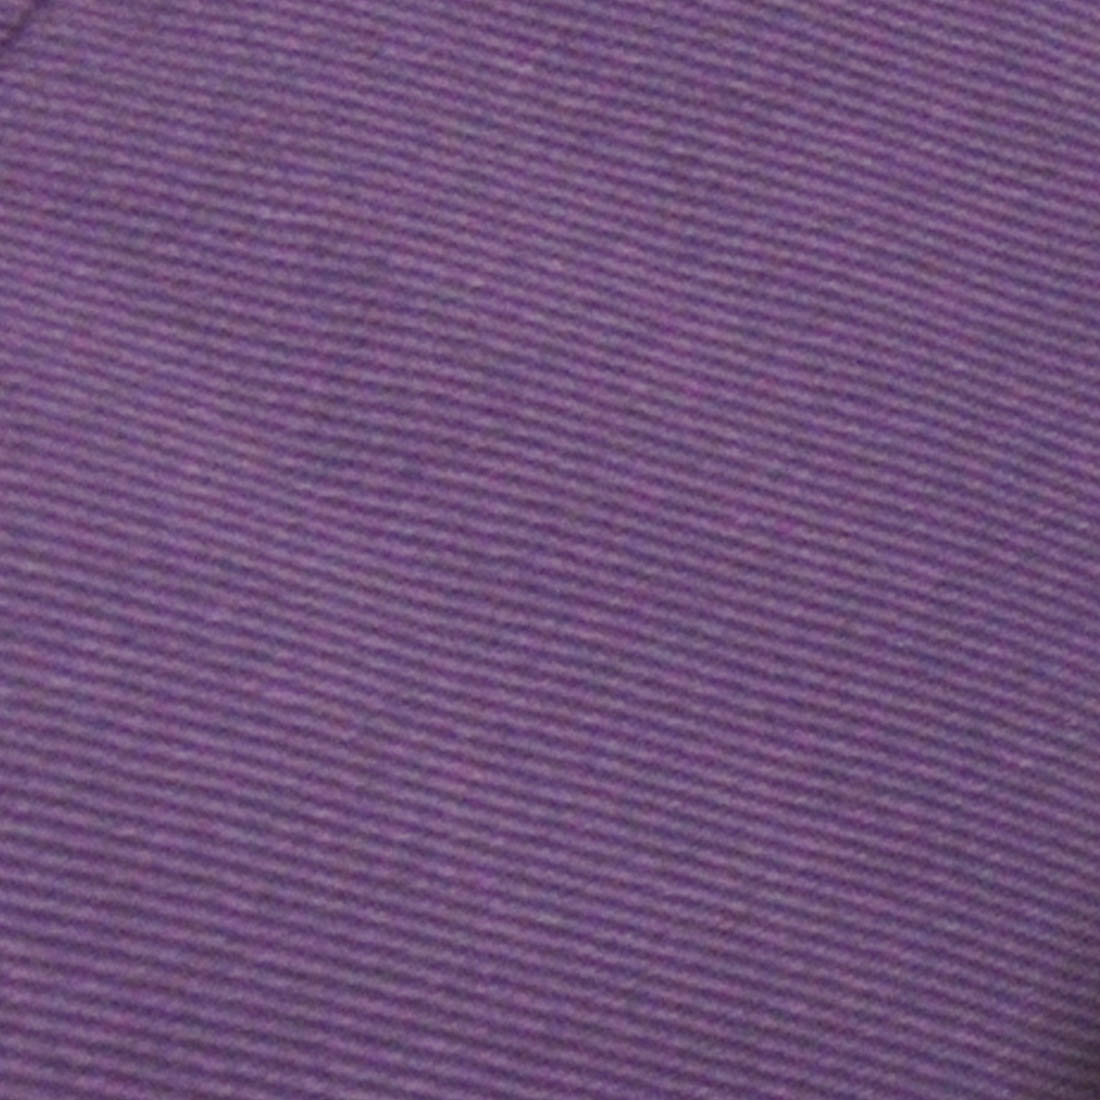 ORKA Denier Fabric 18 X 18 Inch Premium Pouf With Beans - Purple  